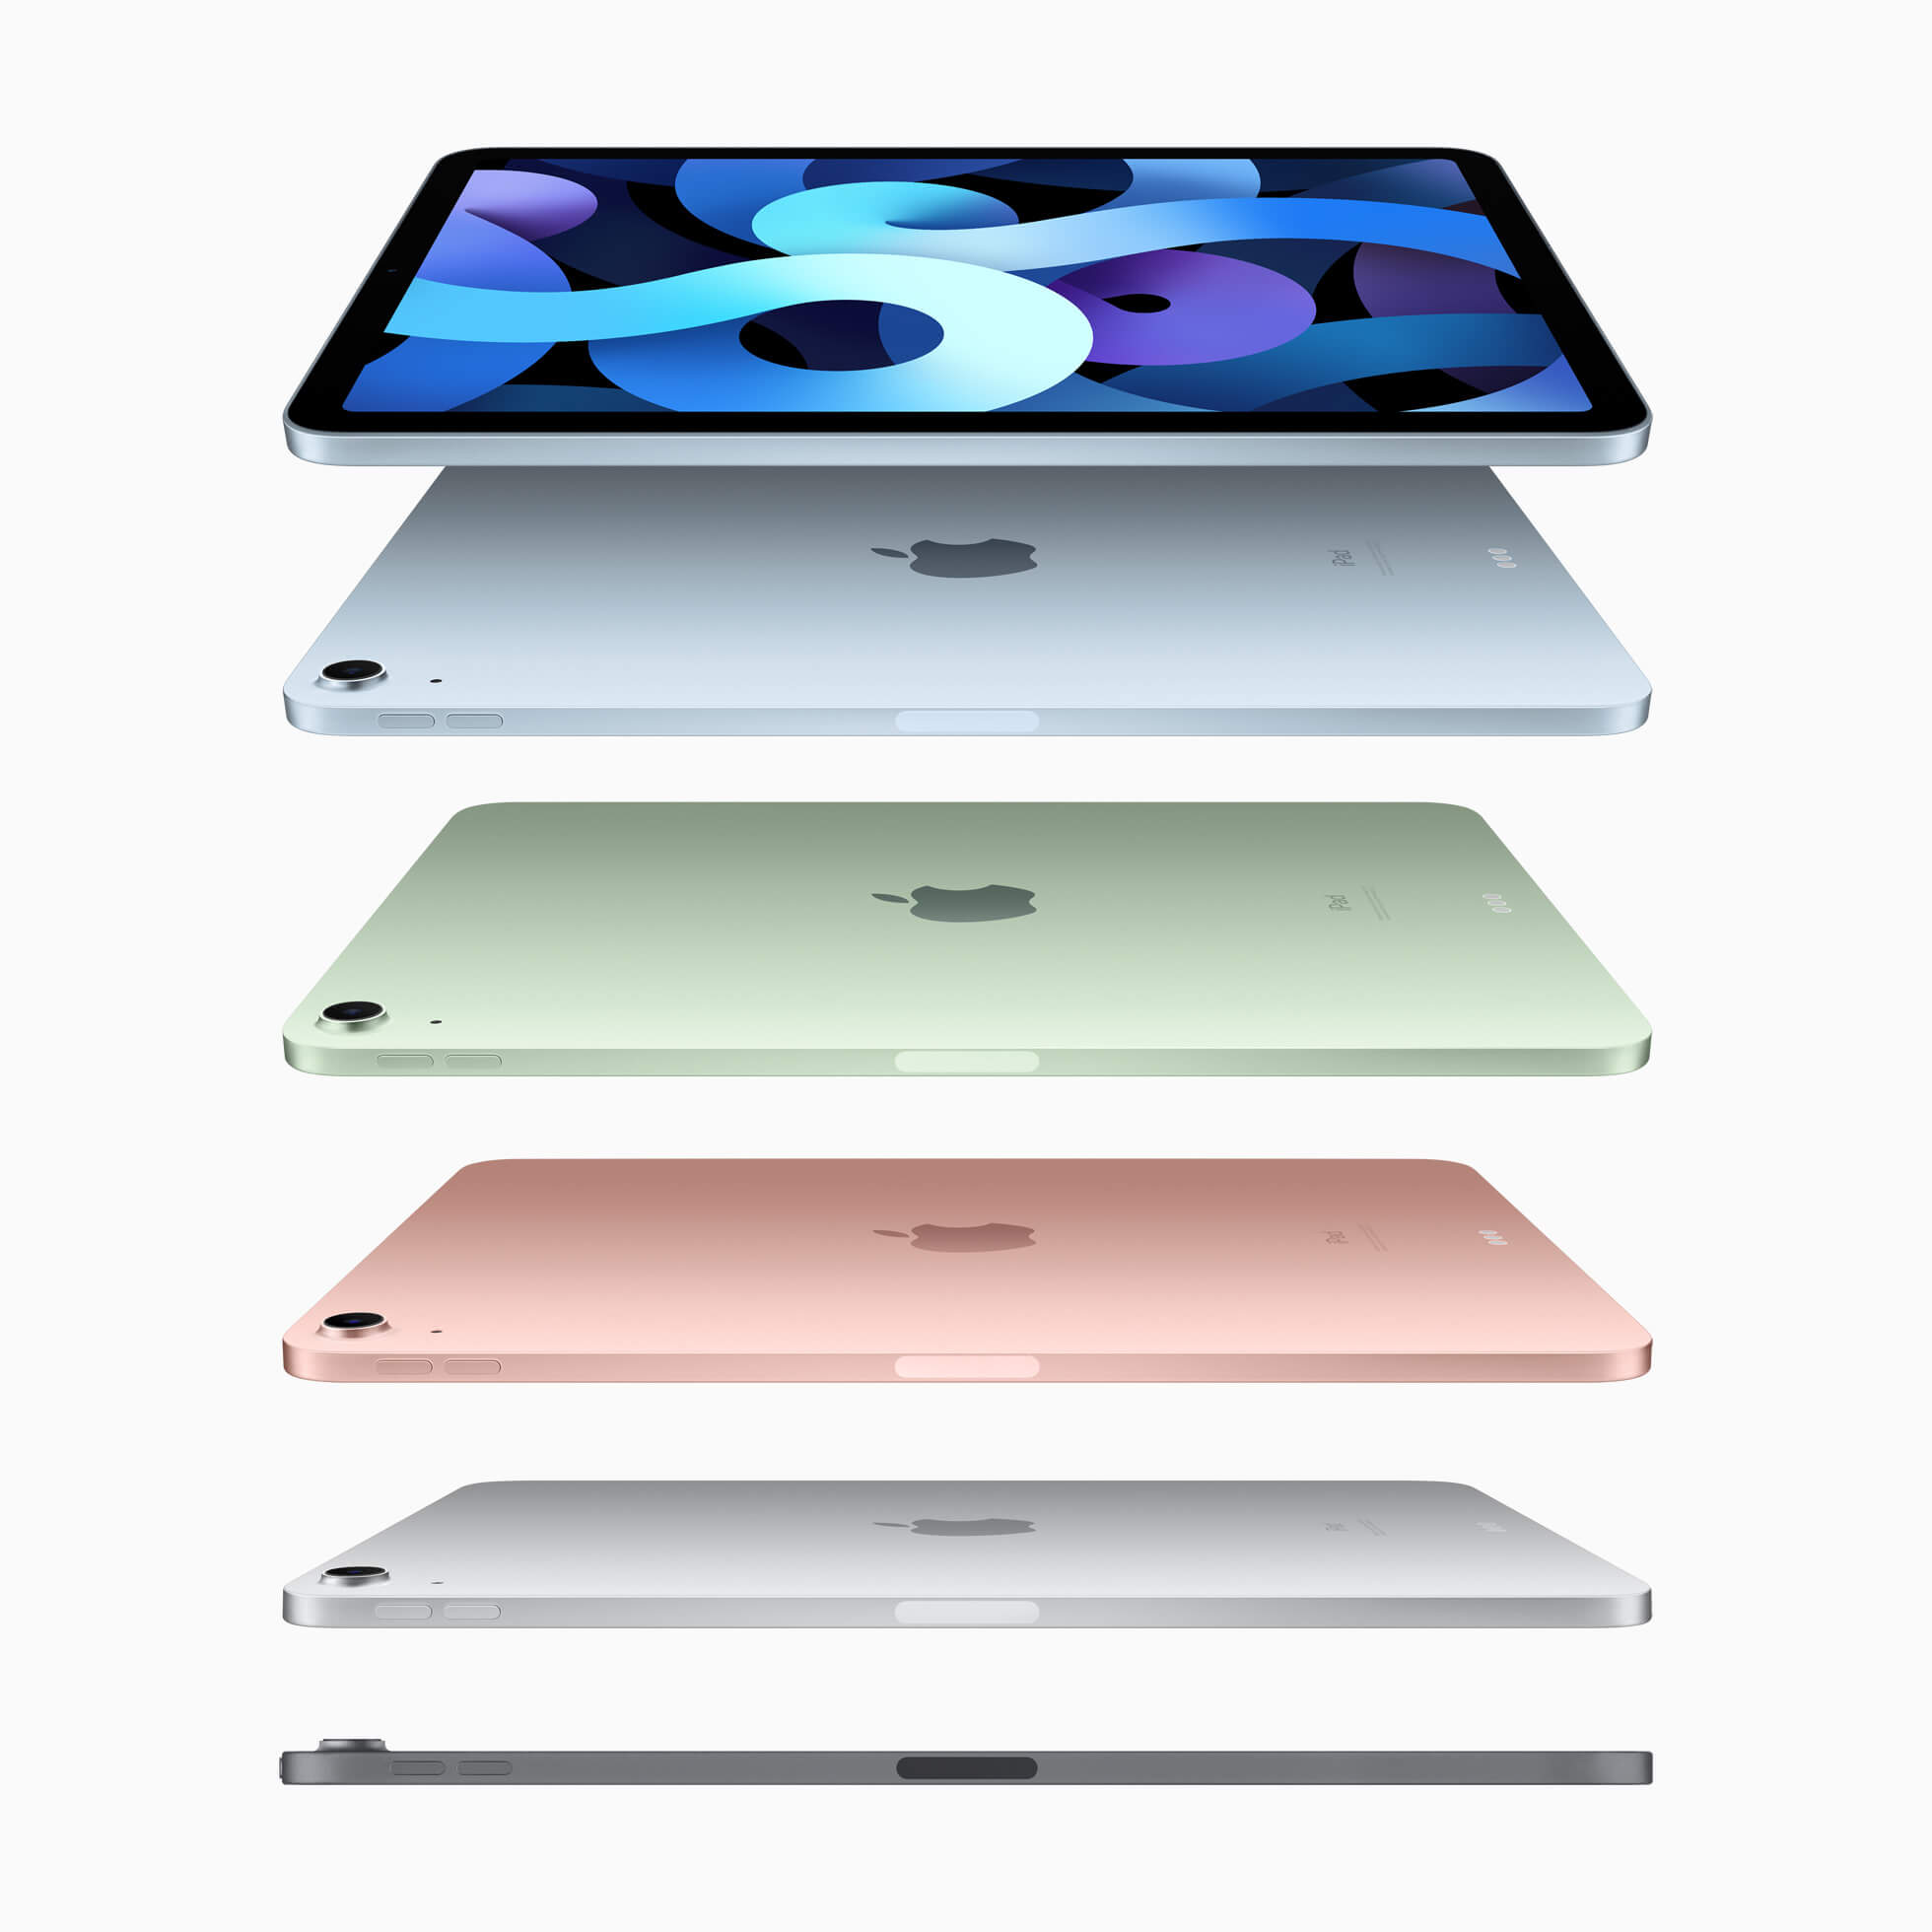 iPad Air 4 Prokwaliteit tegen lagere prijs? Apple Coach